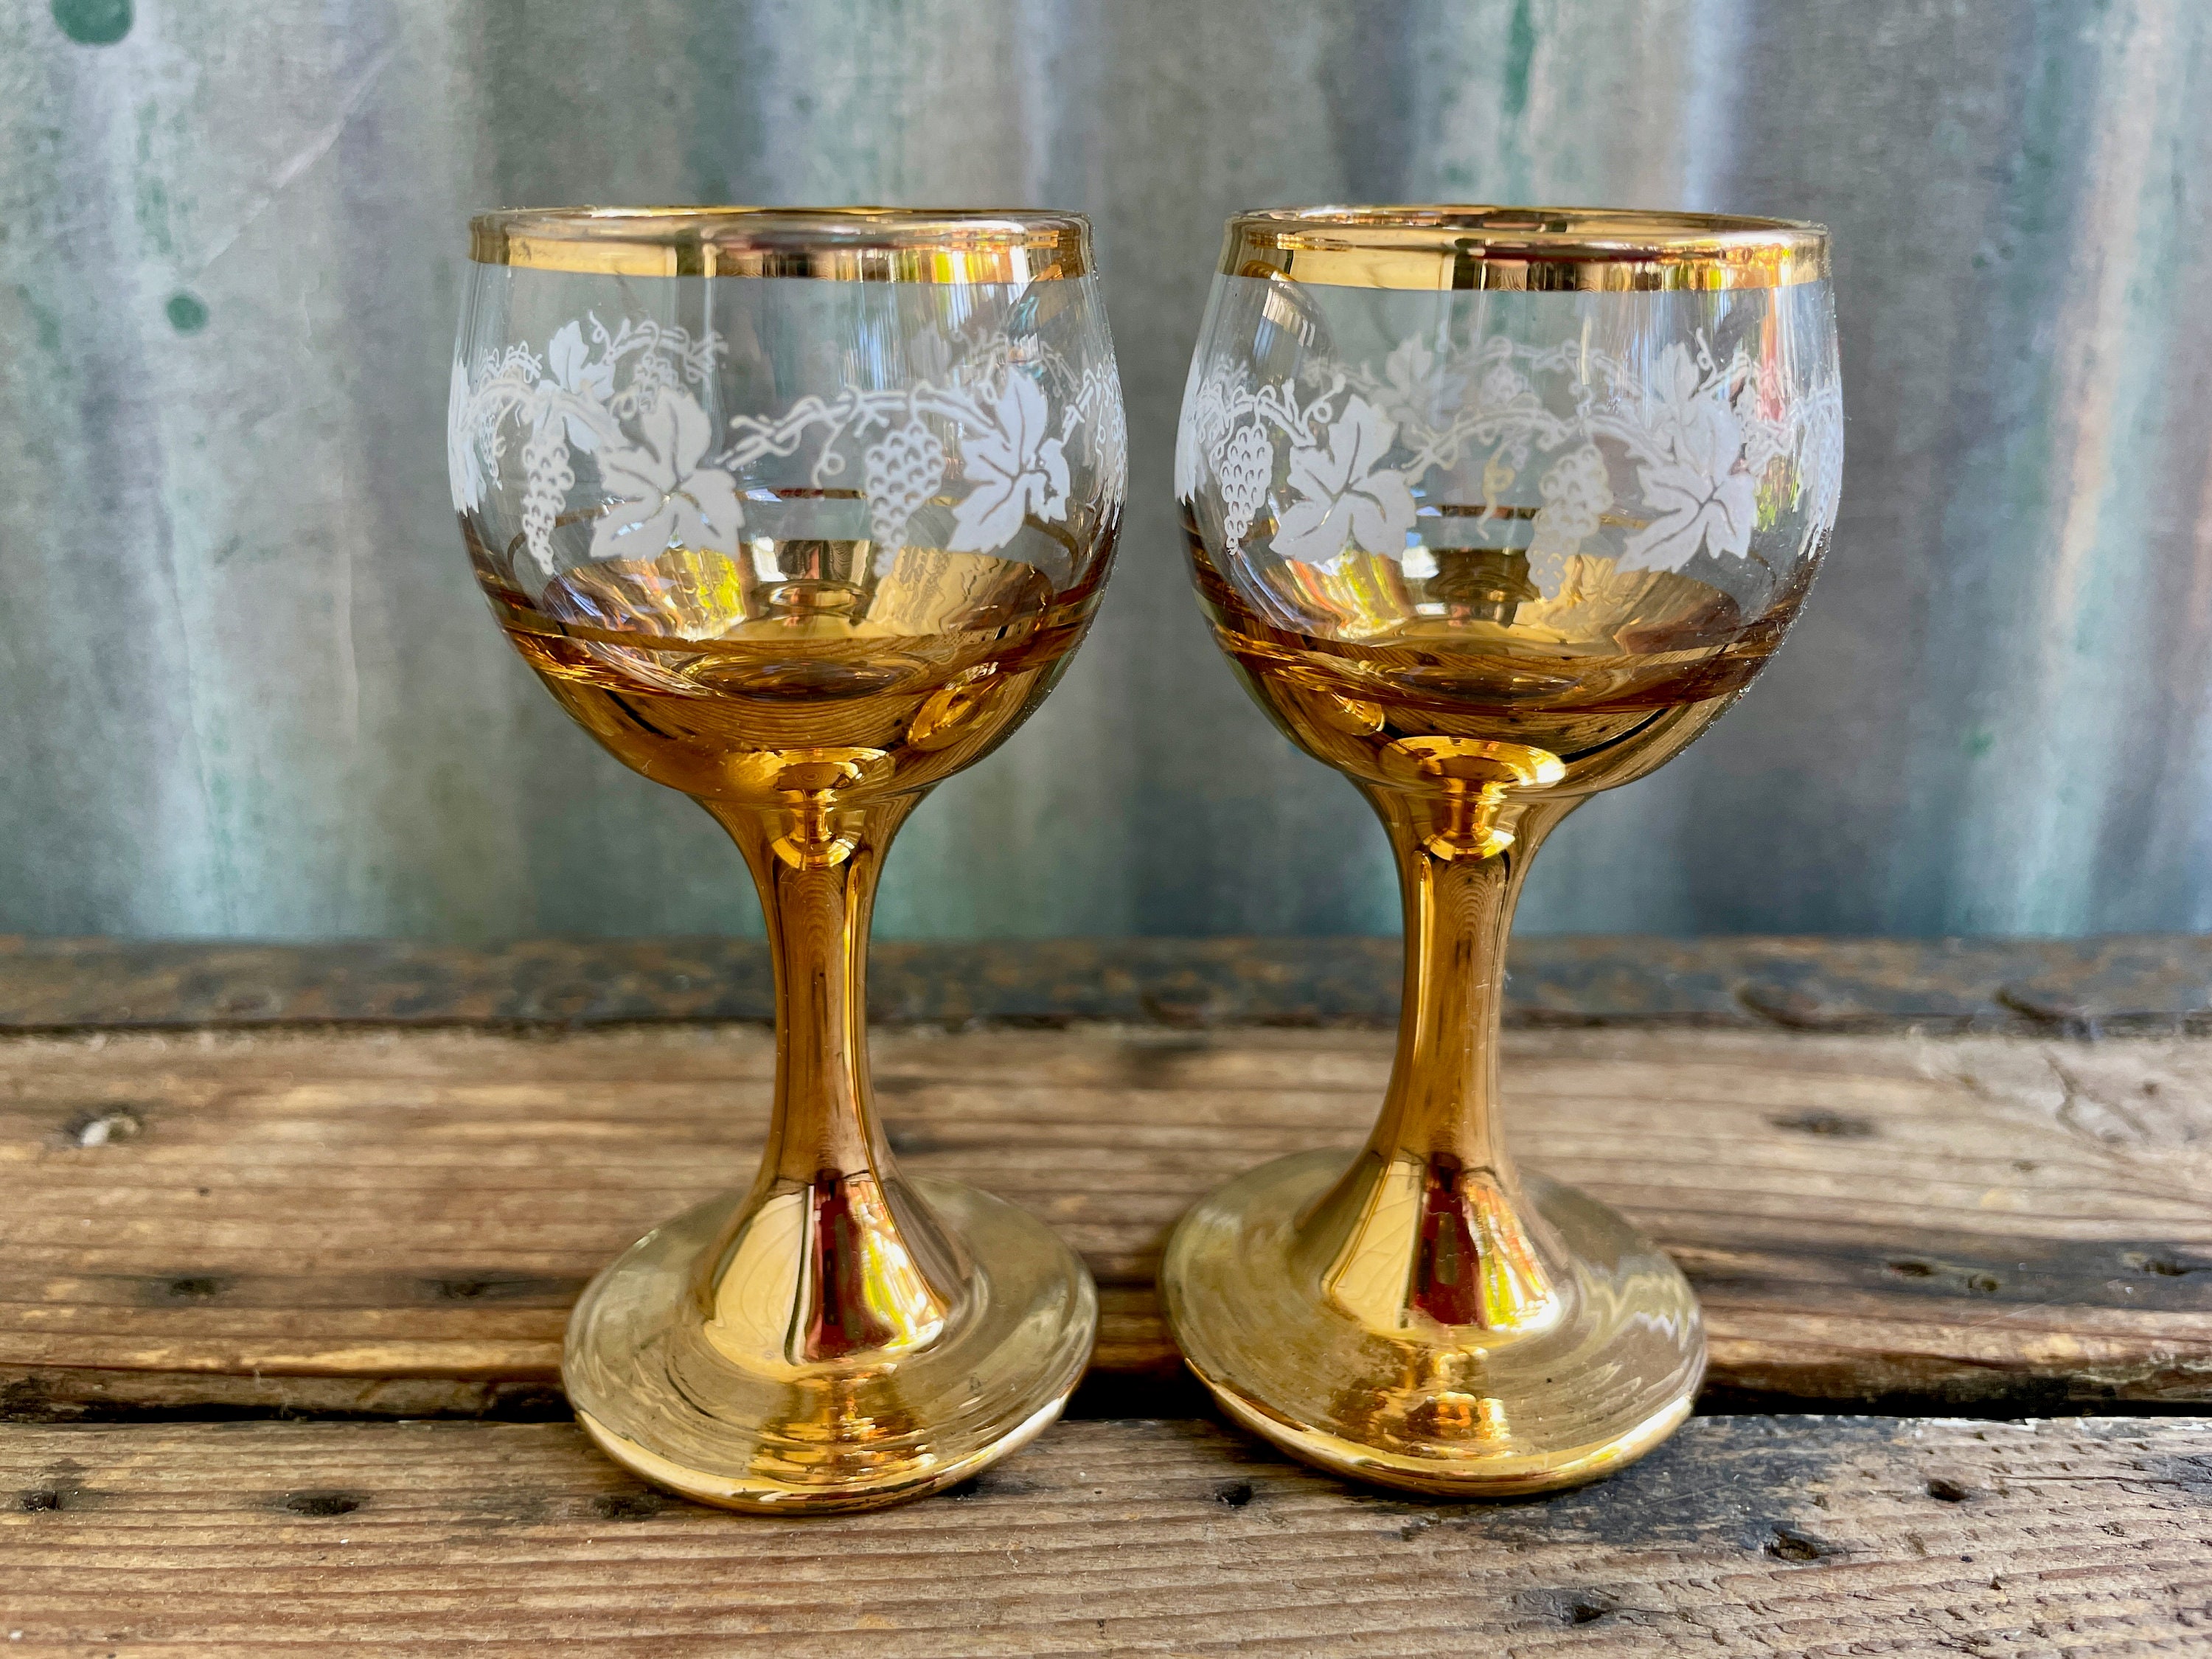 JoyJolt Saga Crystal Liquor Glasses - Cordial Glasses Made in  Europe - 1.5 oz / 50 ml Absinthe Glass - Set of 4 Liqueur Glasses for  Absinthe, Aperol, sherry or